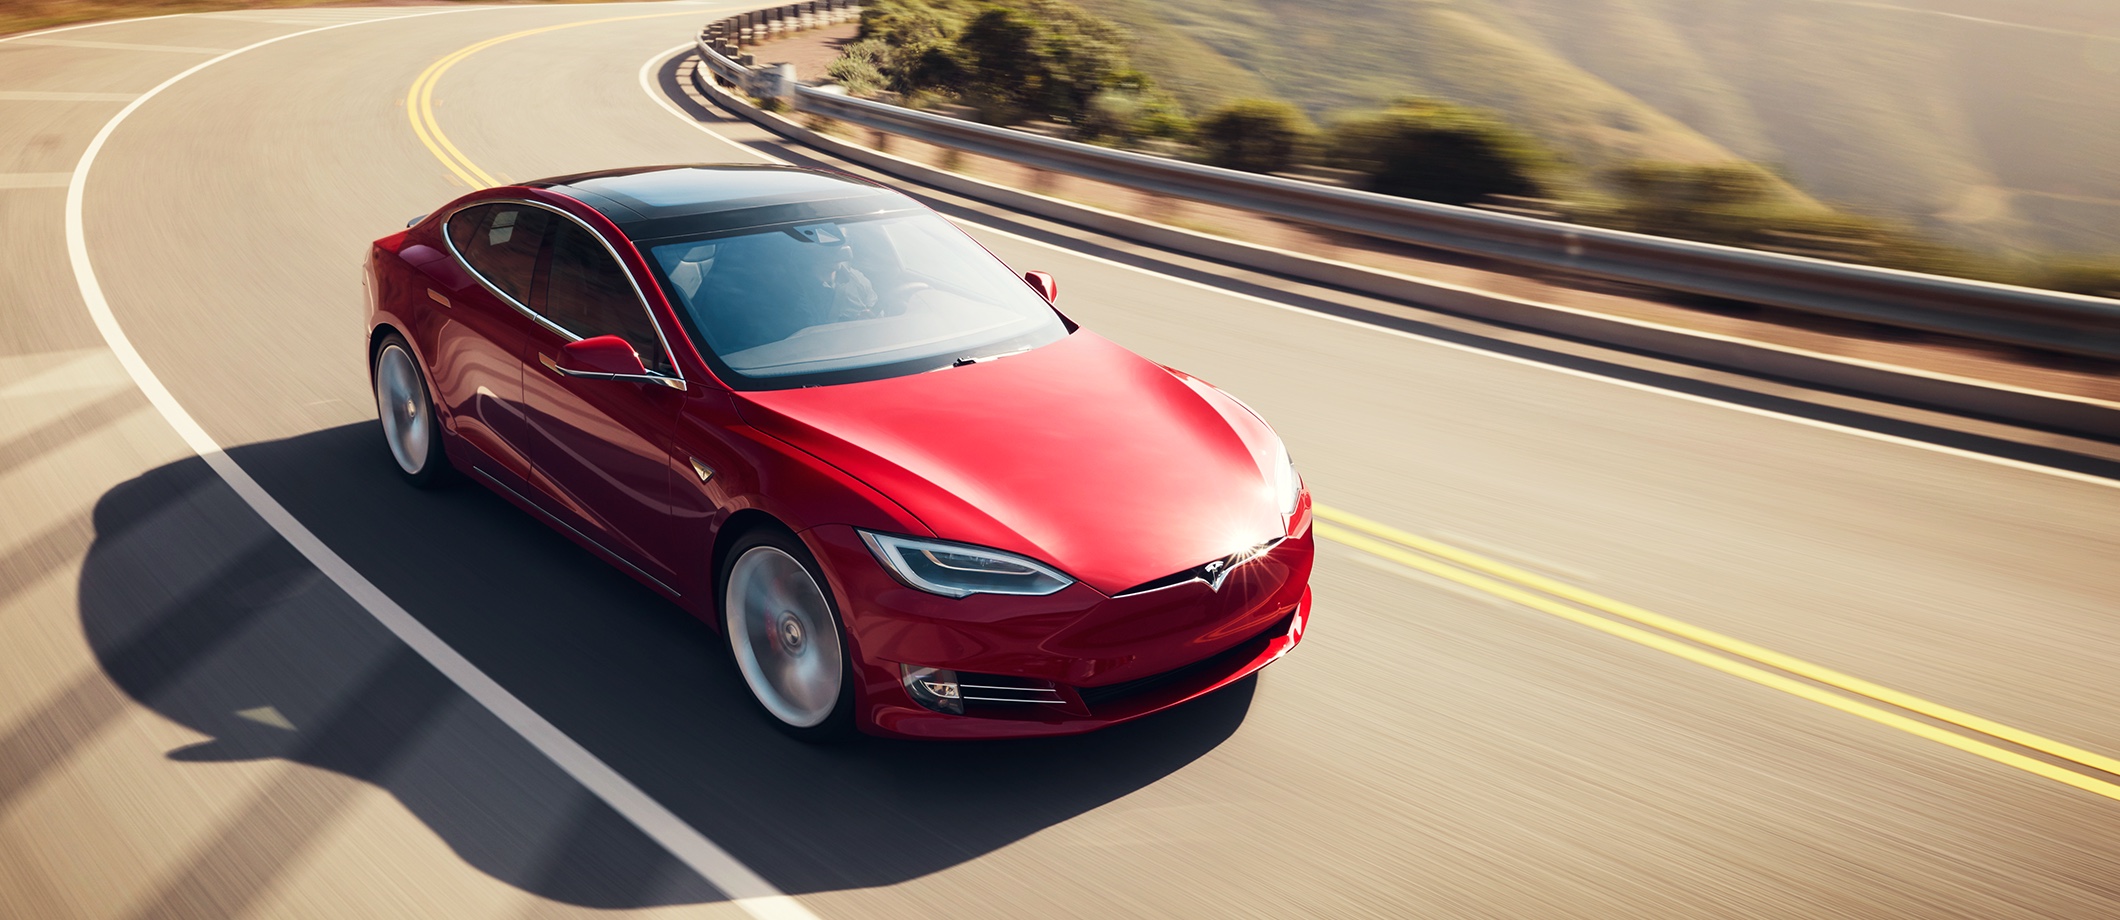 Tesla Model S P100d Scores 2 28 Second 0 60 Mph Time In New Motor Trend Test Techcrunch